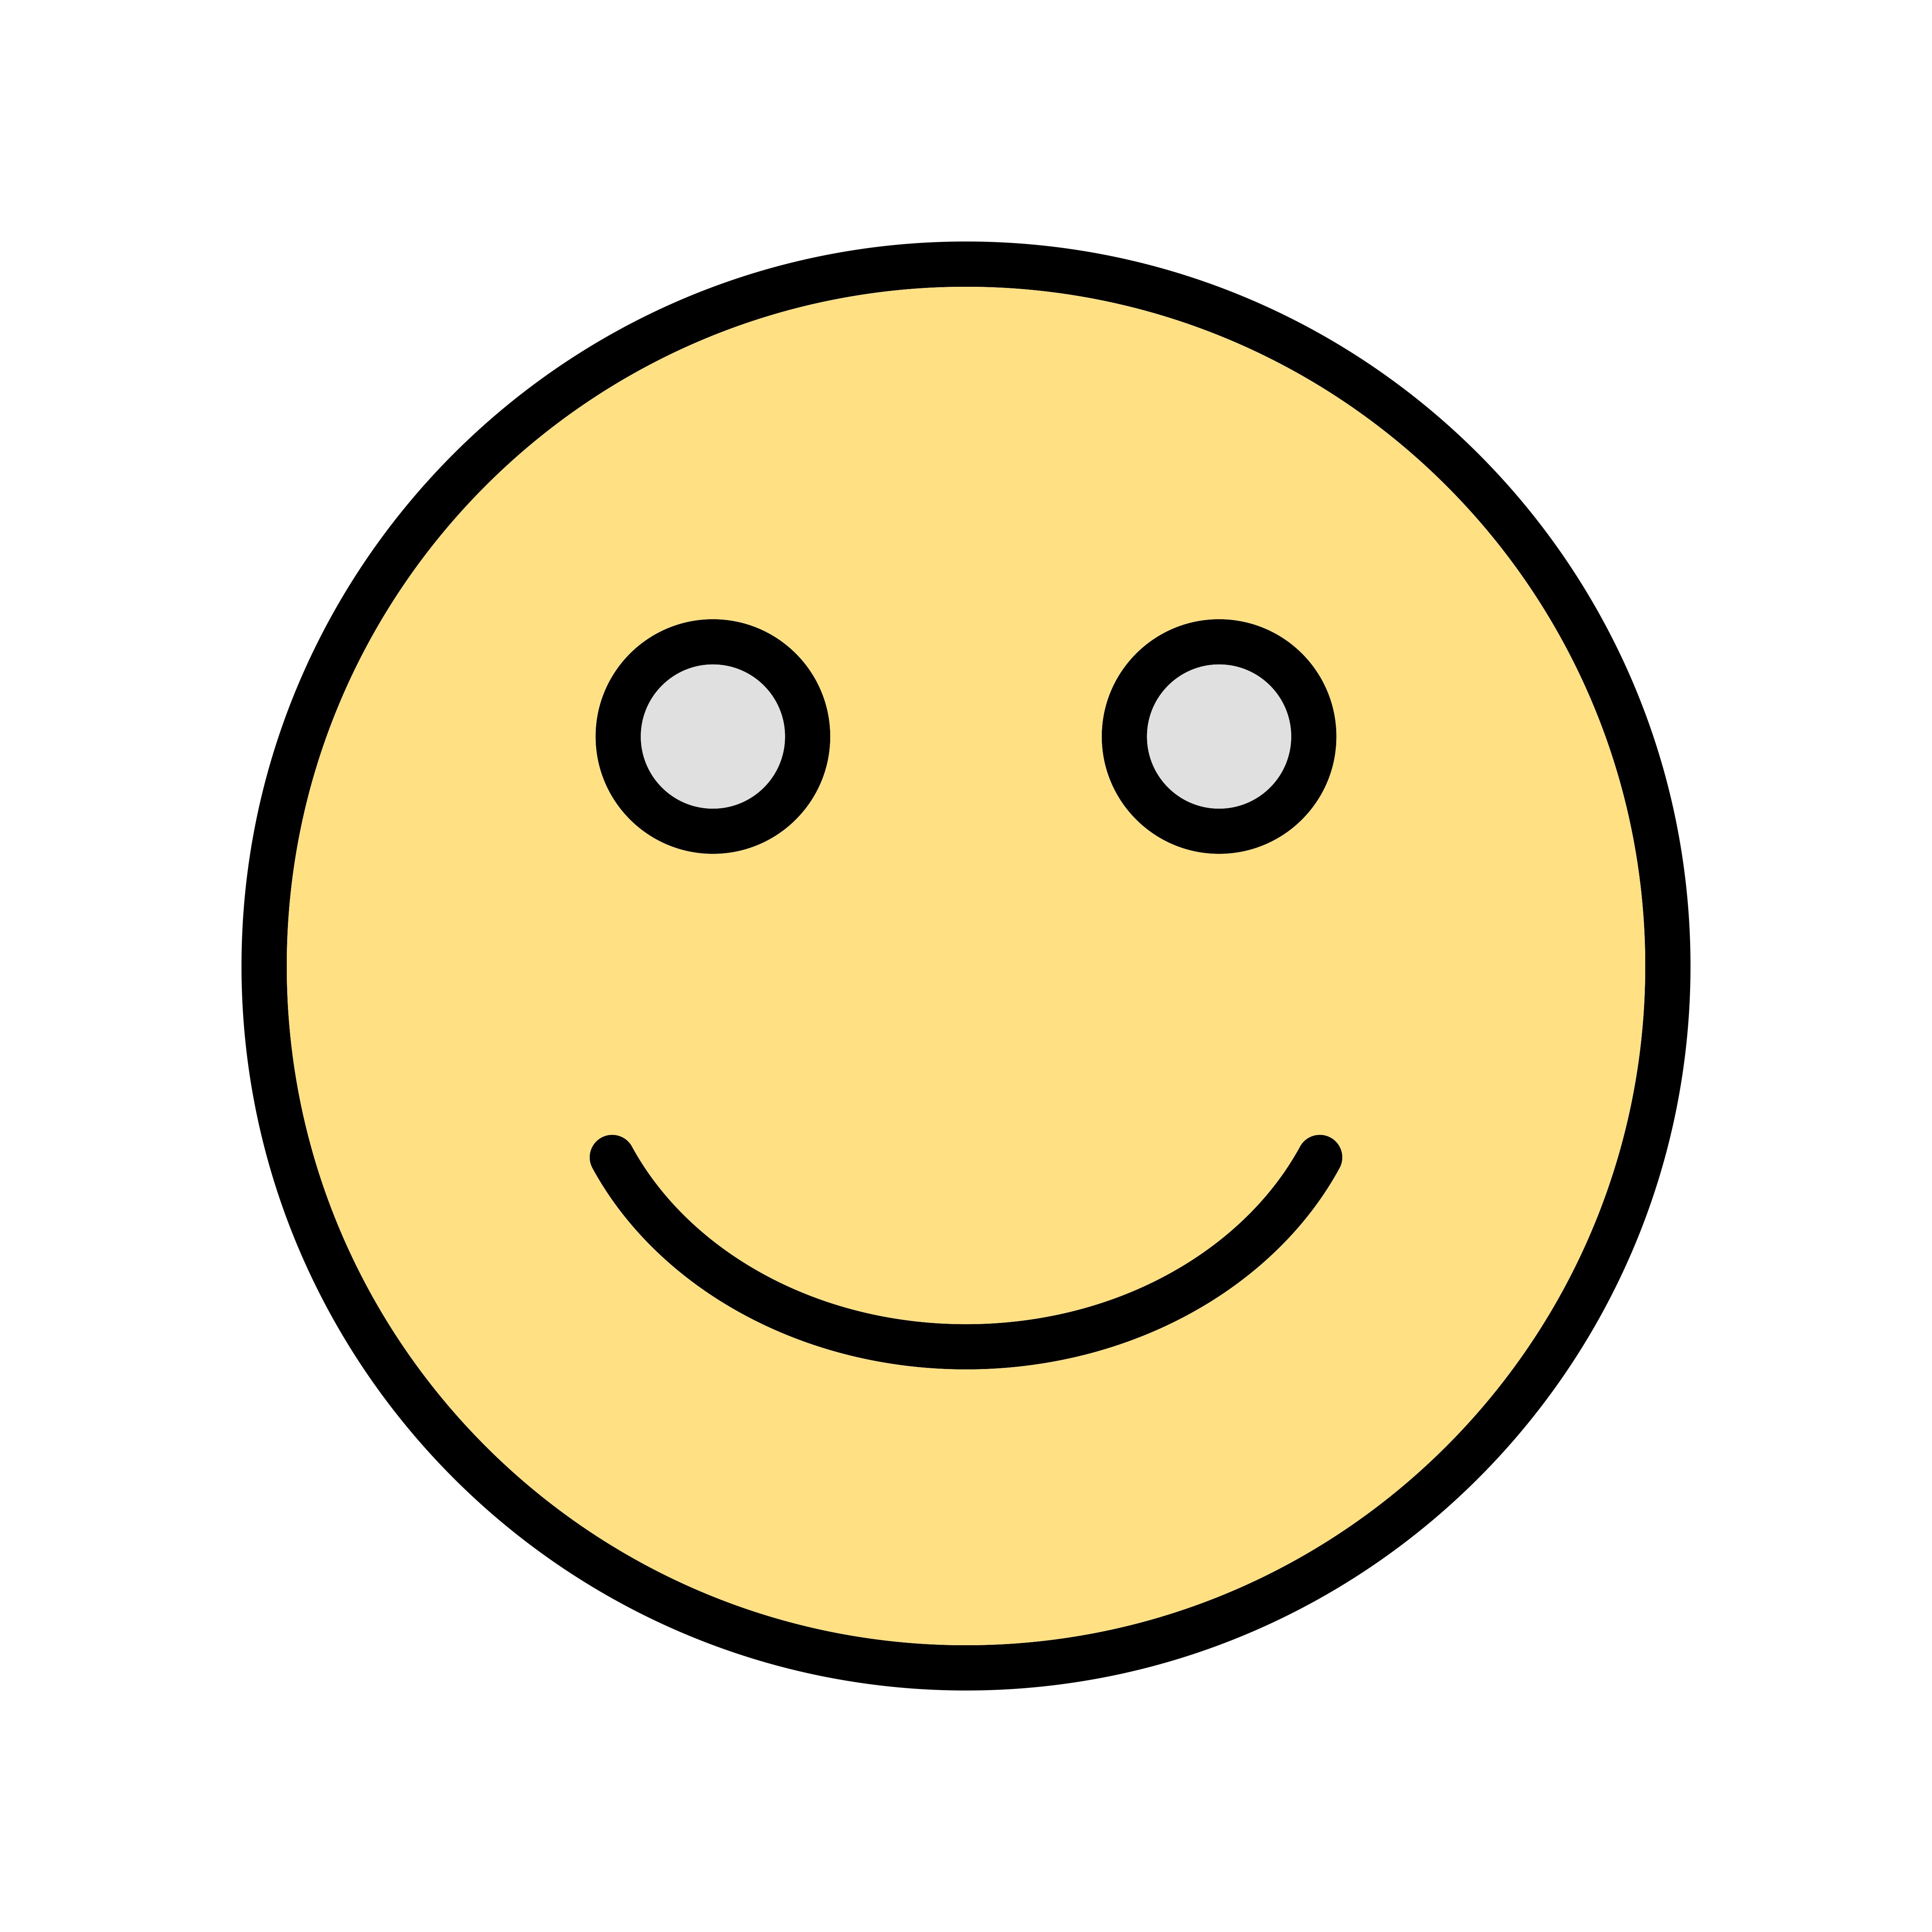 Download Happy Emoji Vector Icon - Download Free Vectors, Clipart Graphics & Vector Art